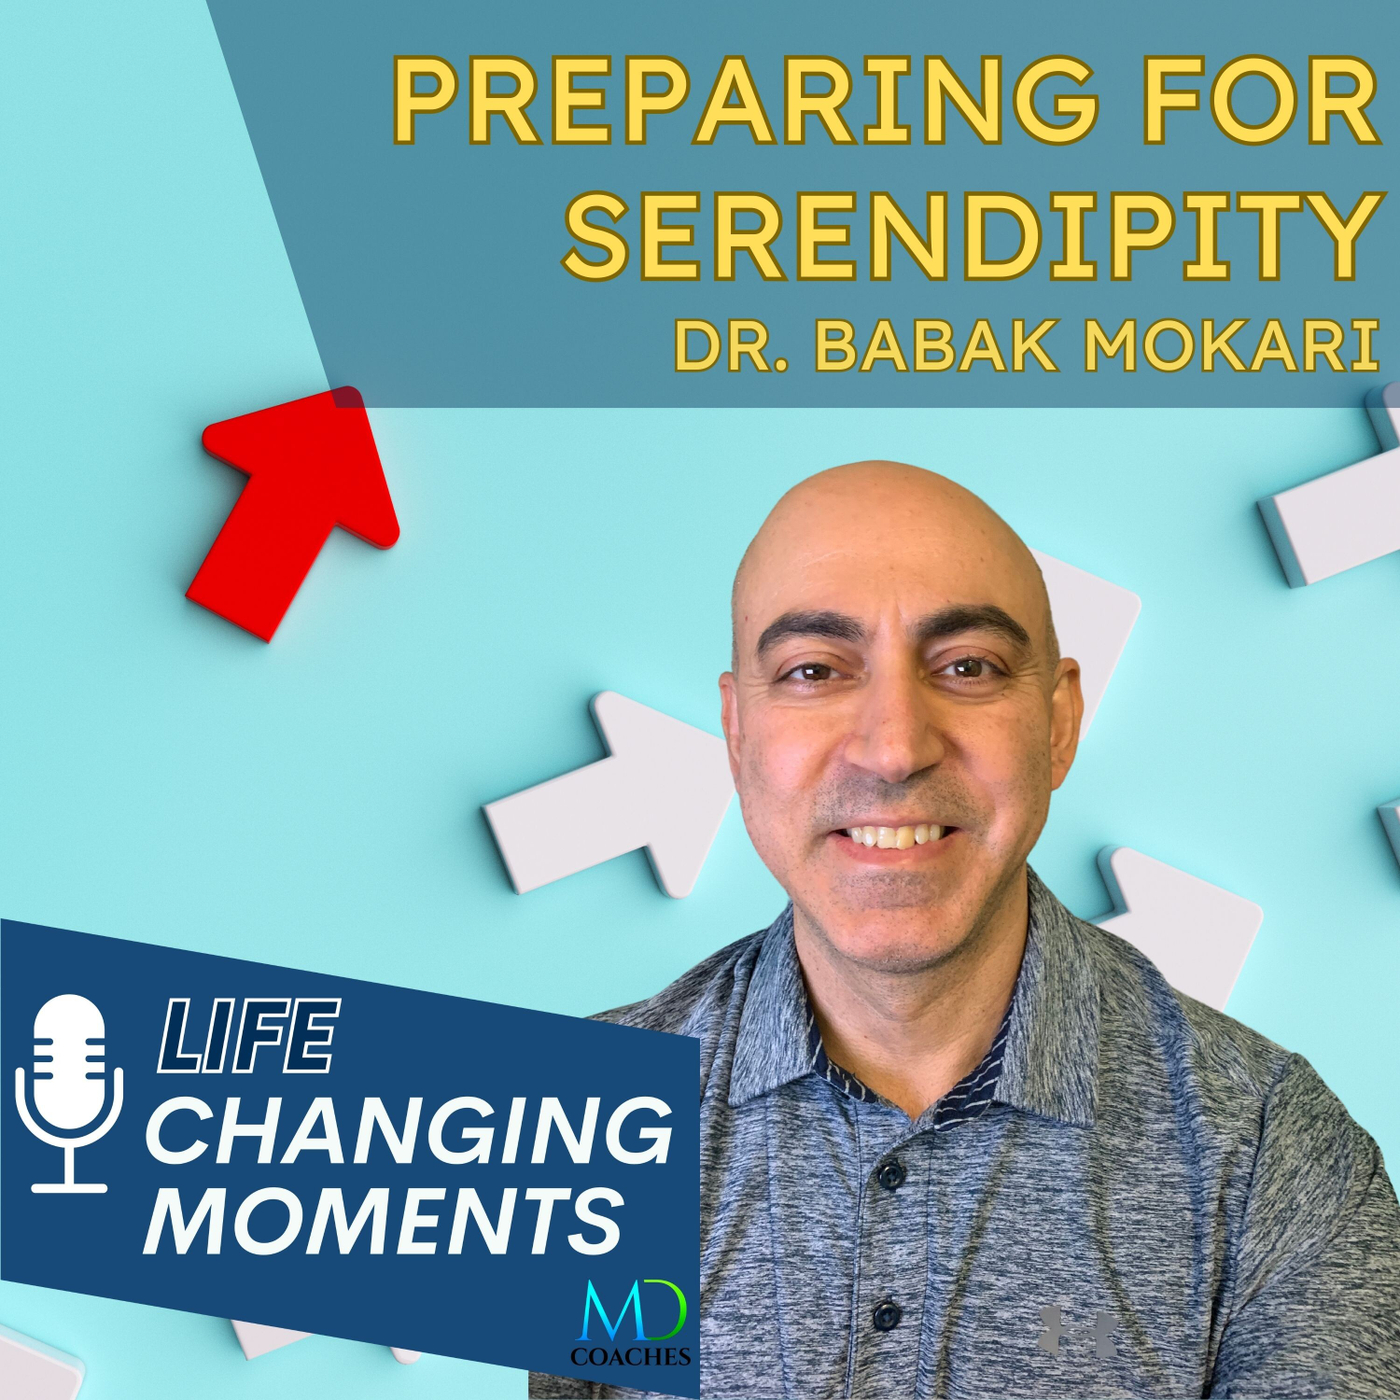 life changing moments 21 preparing for serendipity with dr babak mokari